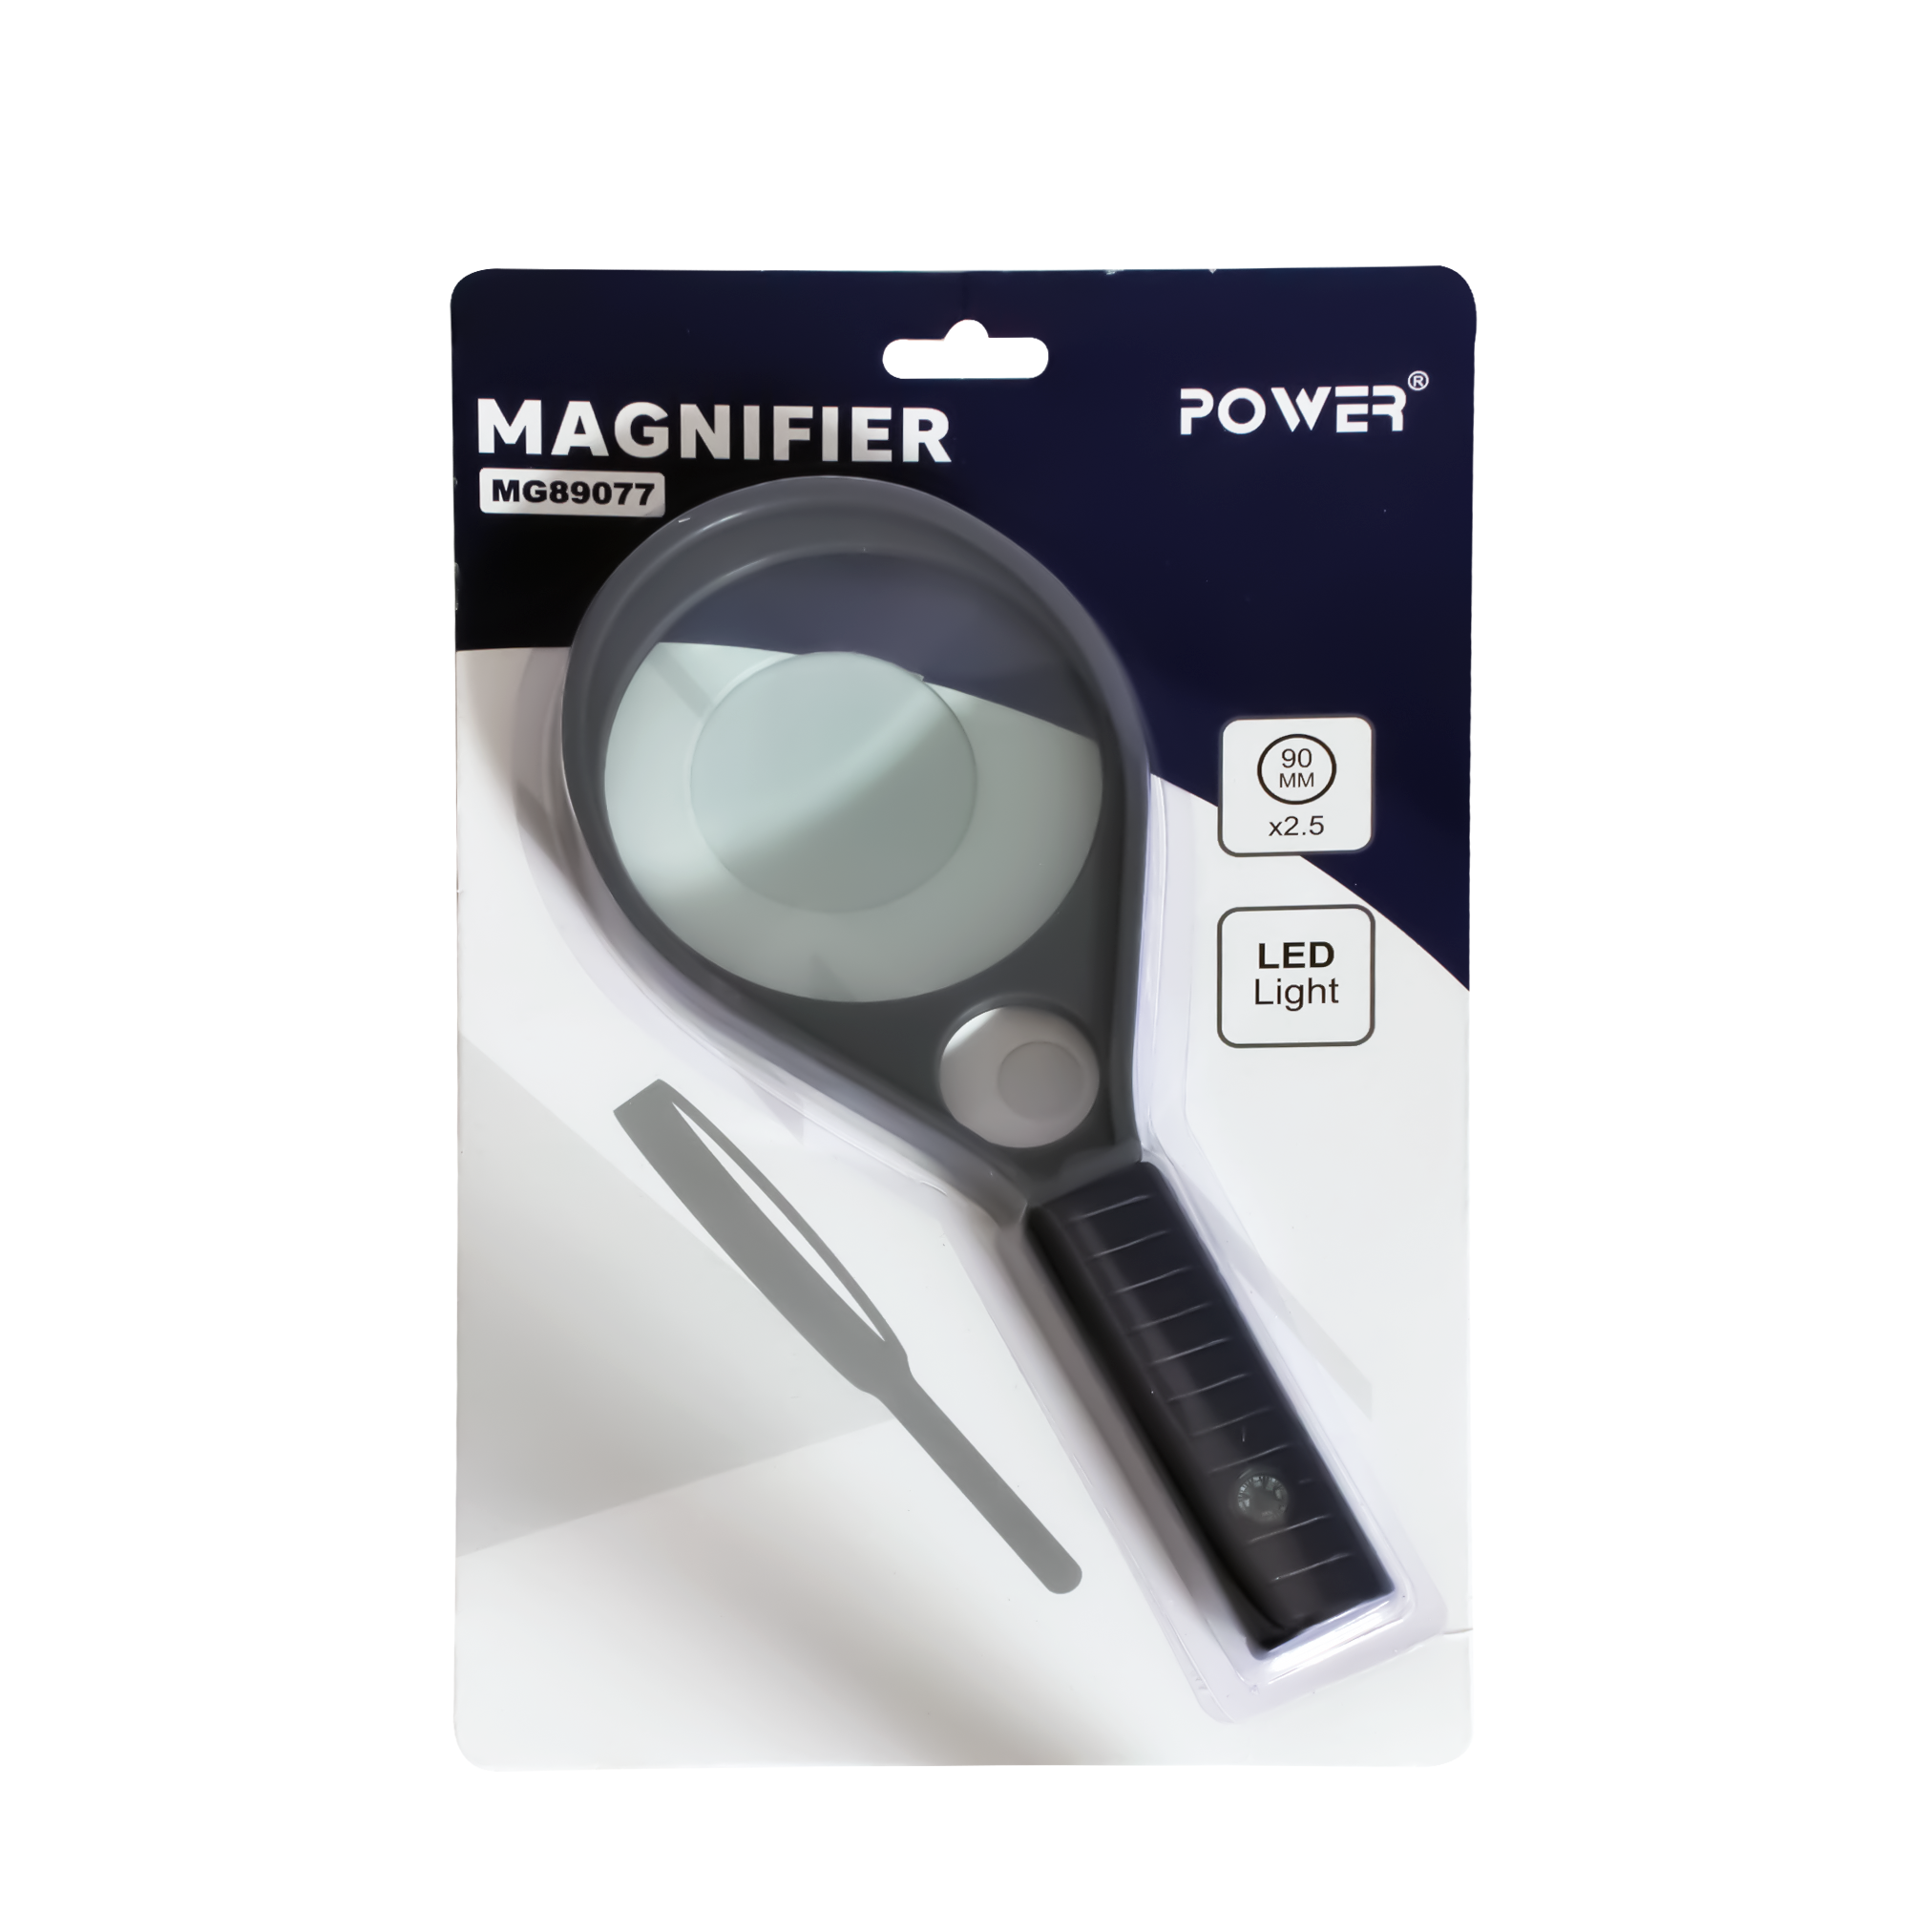 Power Magnifier MG 89077 90 mm x 2.5 LED Light